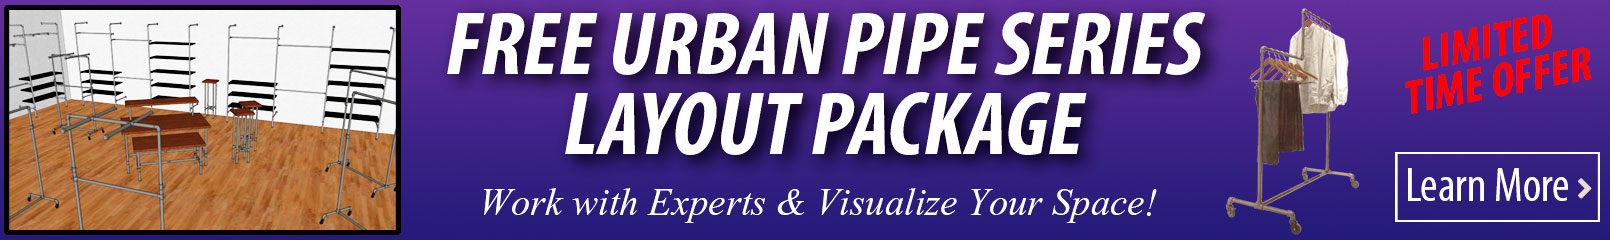 Free Urban Pipe Series Layout Package